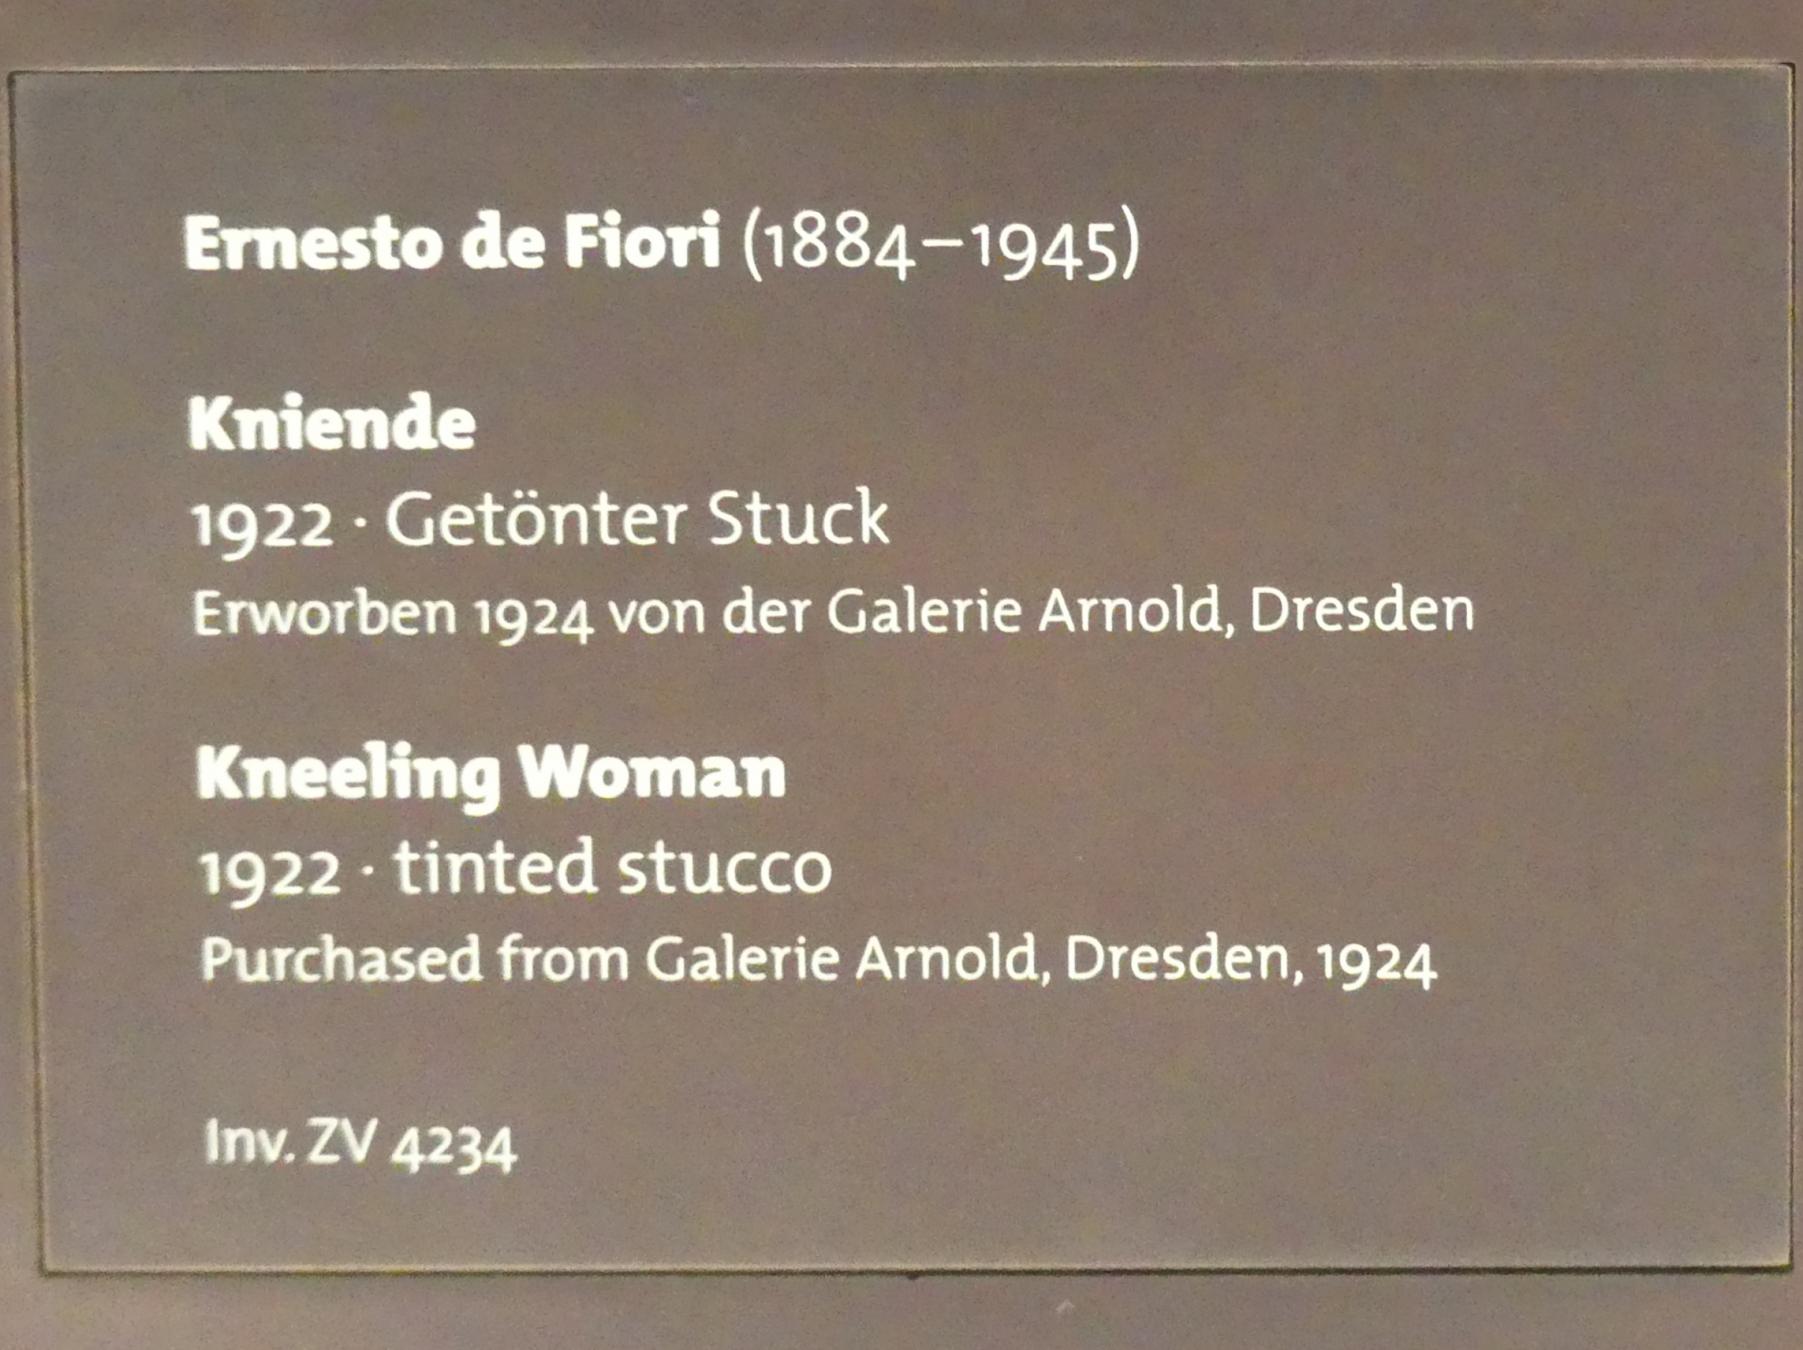 Ernesto de Fiori (1922), Kniende, Dresden, Albertinum, Galerie Neue Meister, Erdgeschoss, Skulpturenhalle, 1922, Bild 2/2